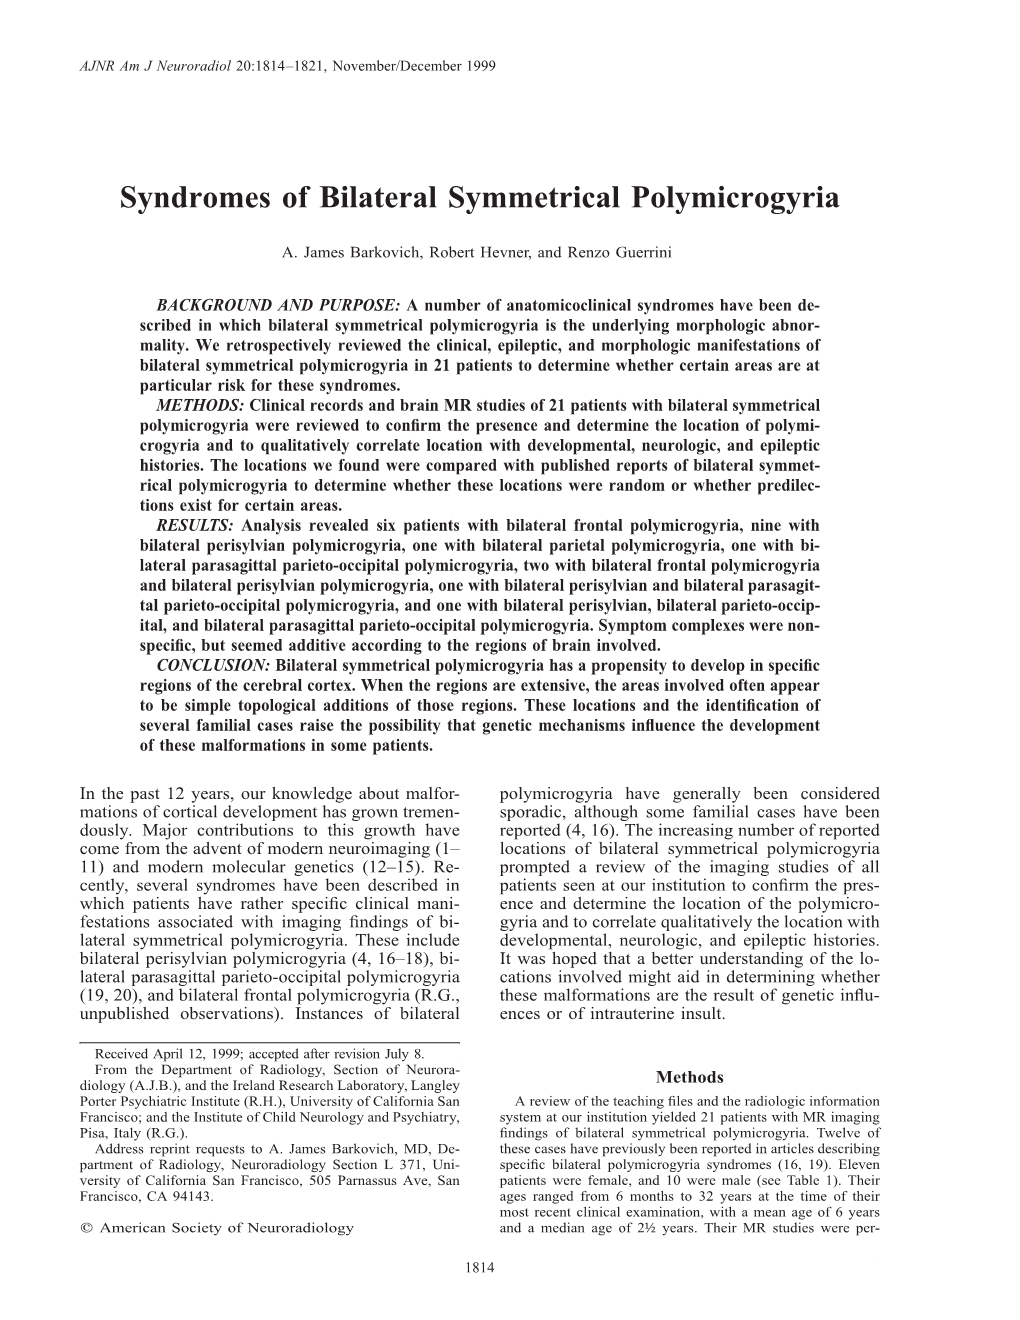 Syndromes of Bilateral Symmetrical Polymicrogyria